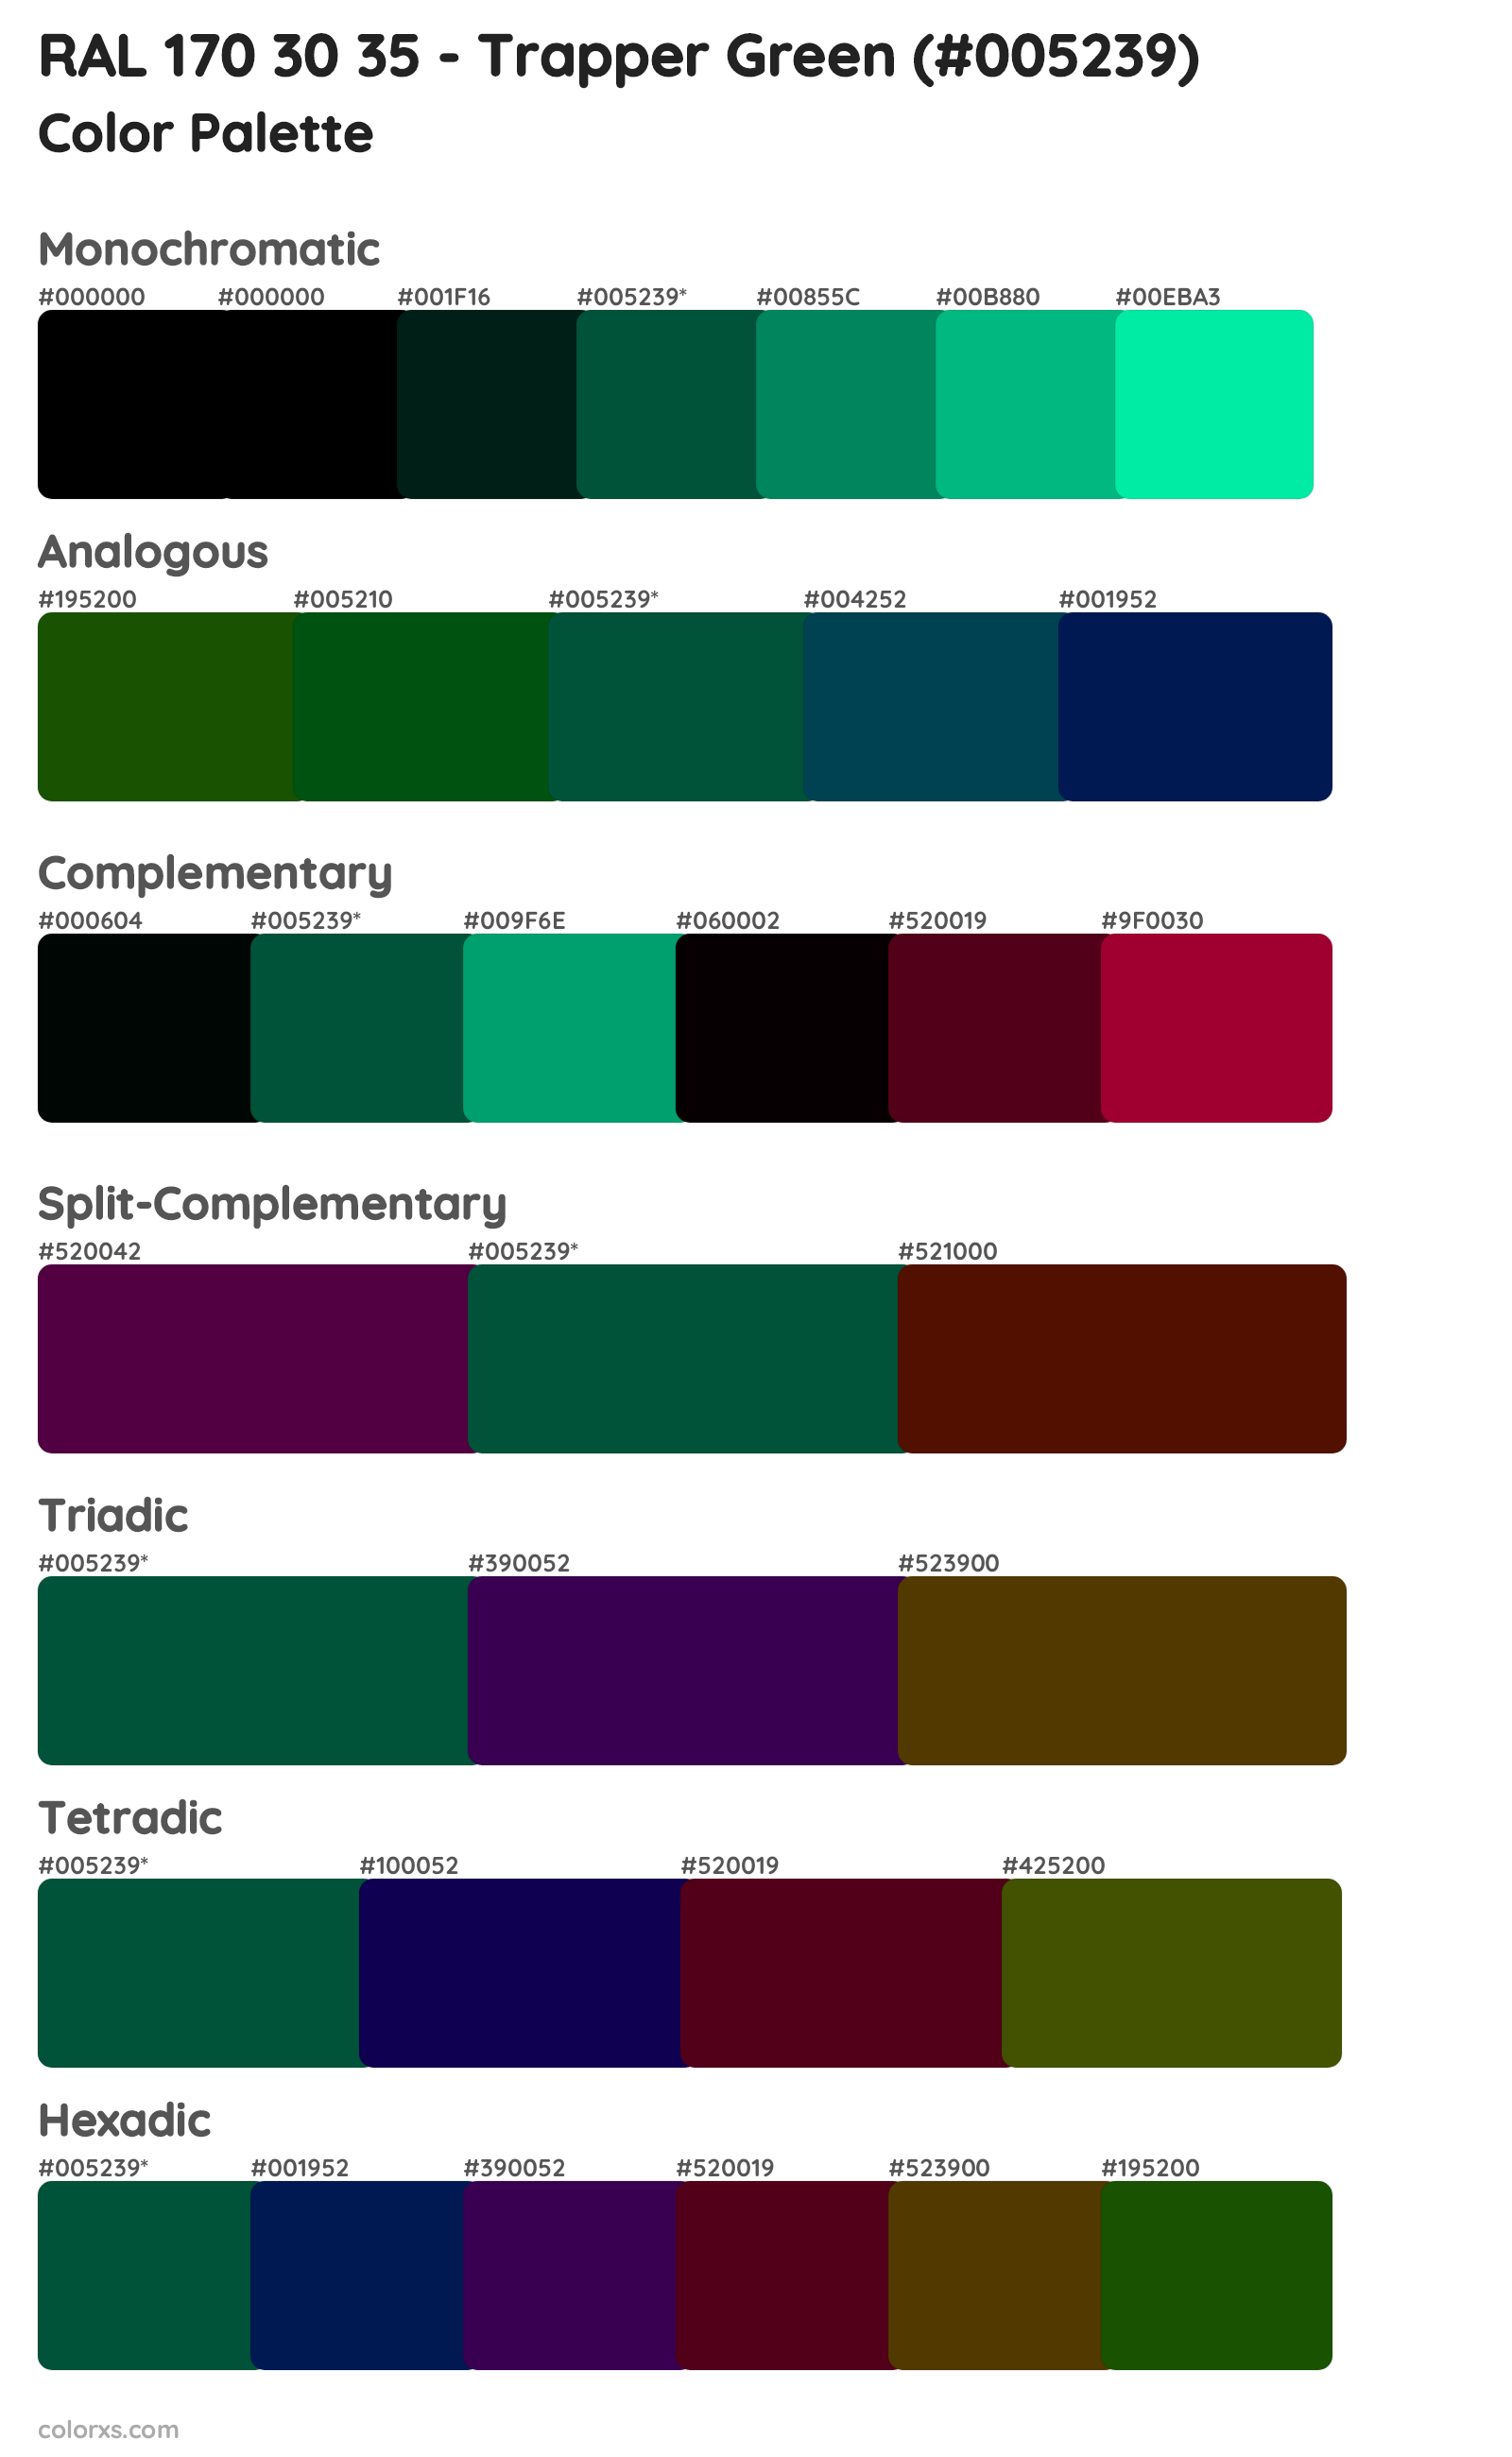 RAL 170 30 35 - Trapper Green Color Scheme Palettes